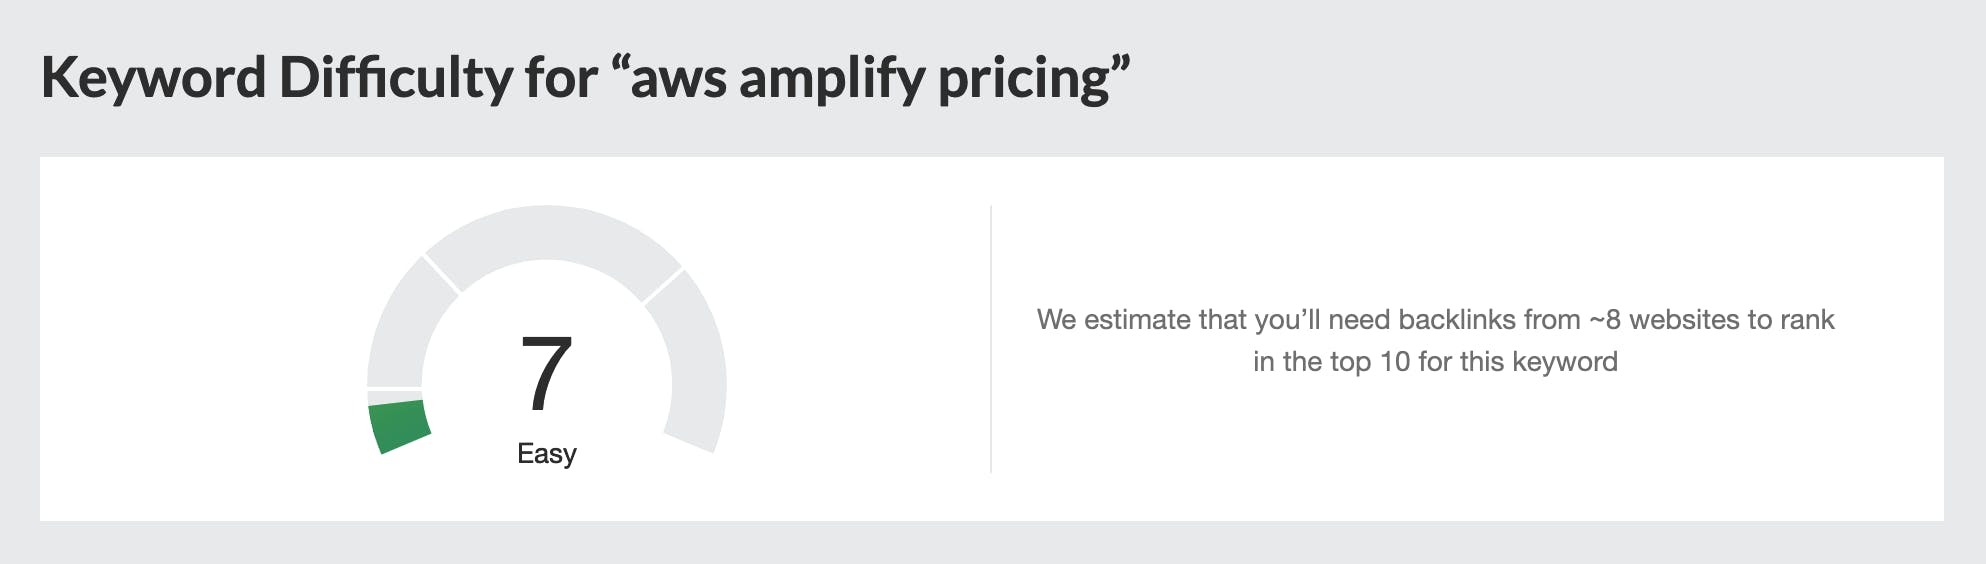 Ahrefs Keyword Difficulty aws amplify pricing